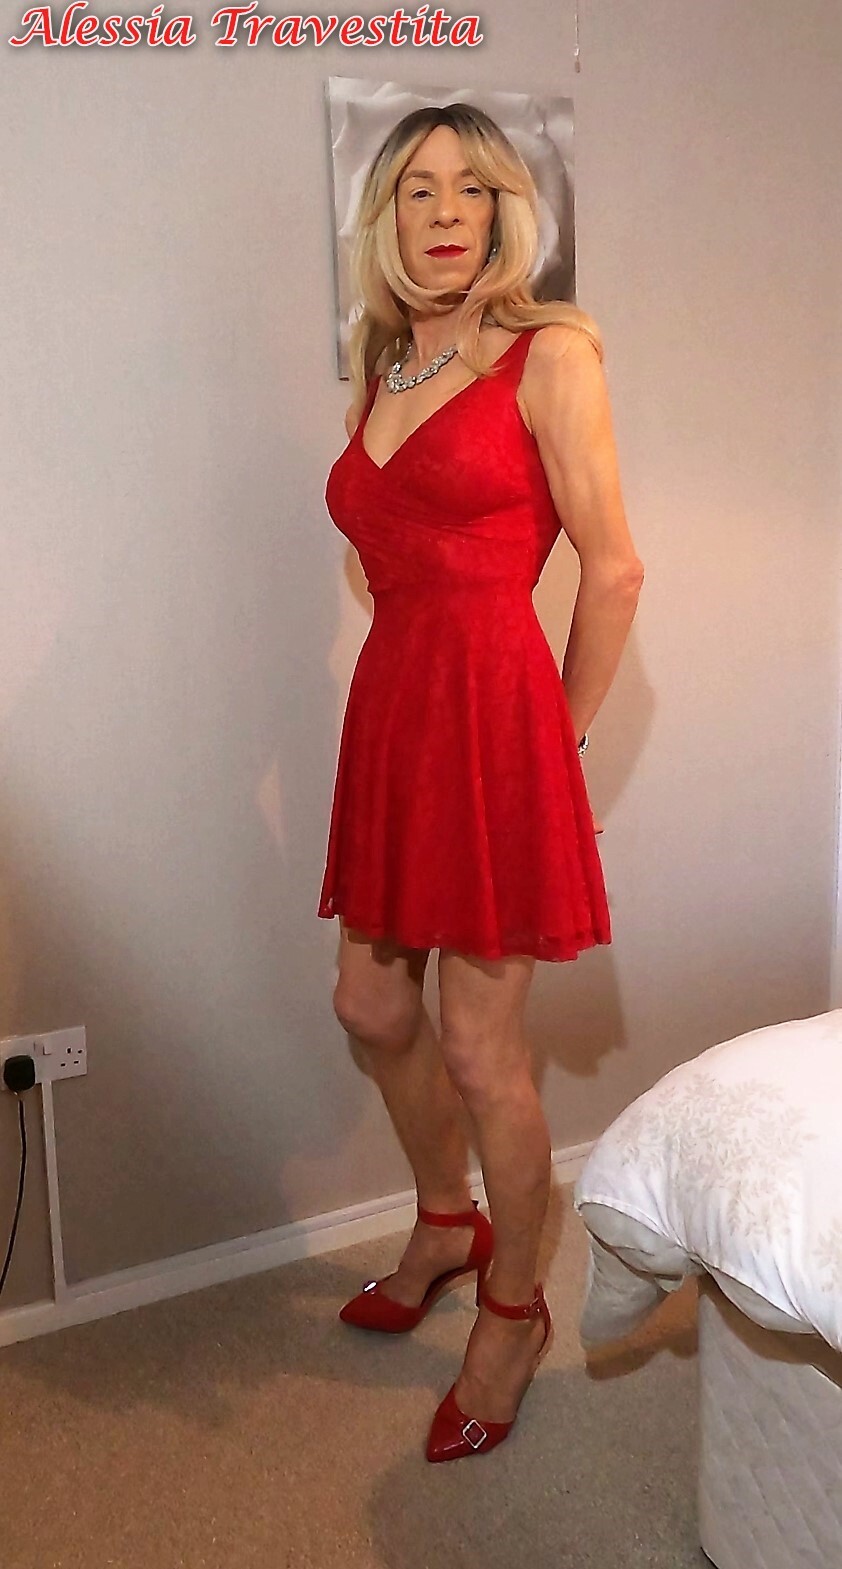 65 Alessia Travestita In Flirty Red Dress Photo 15